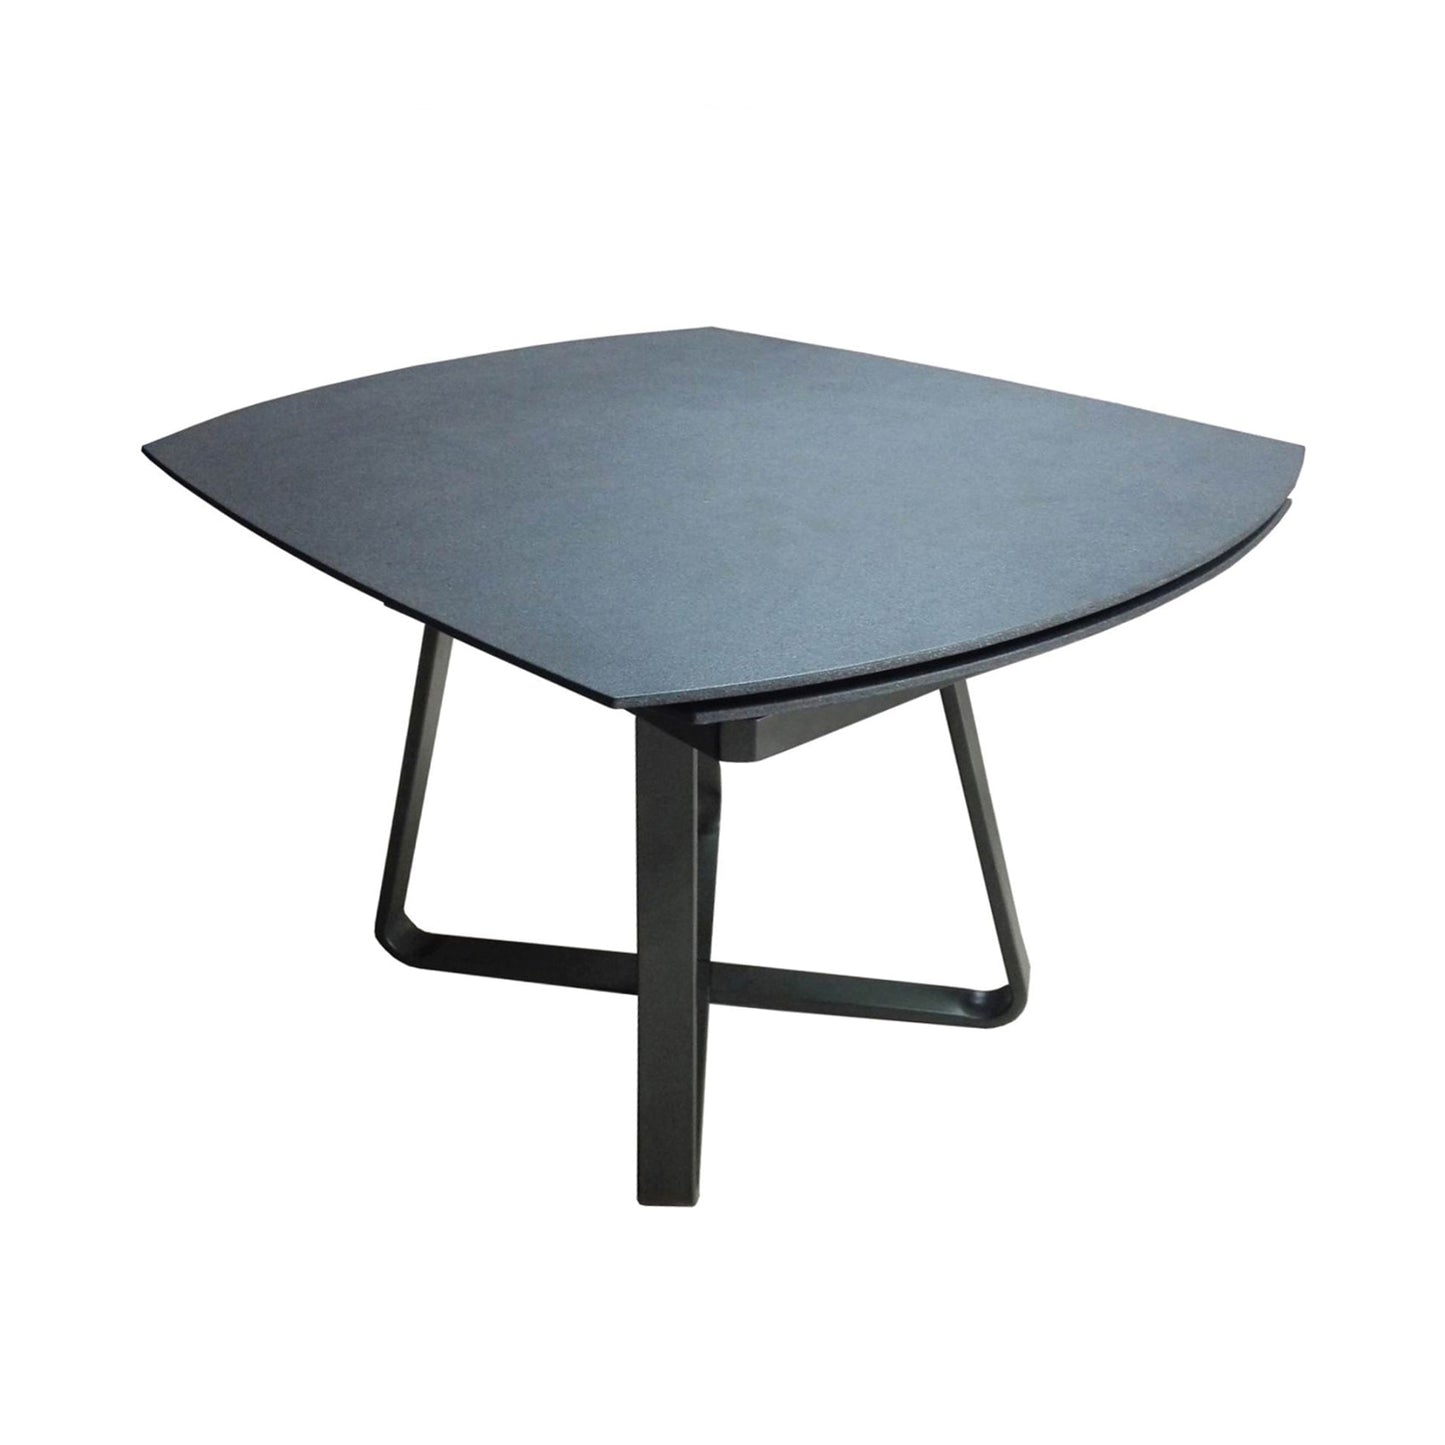 Oxshott Twist Dining Table - 120/190cm